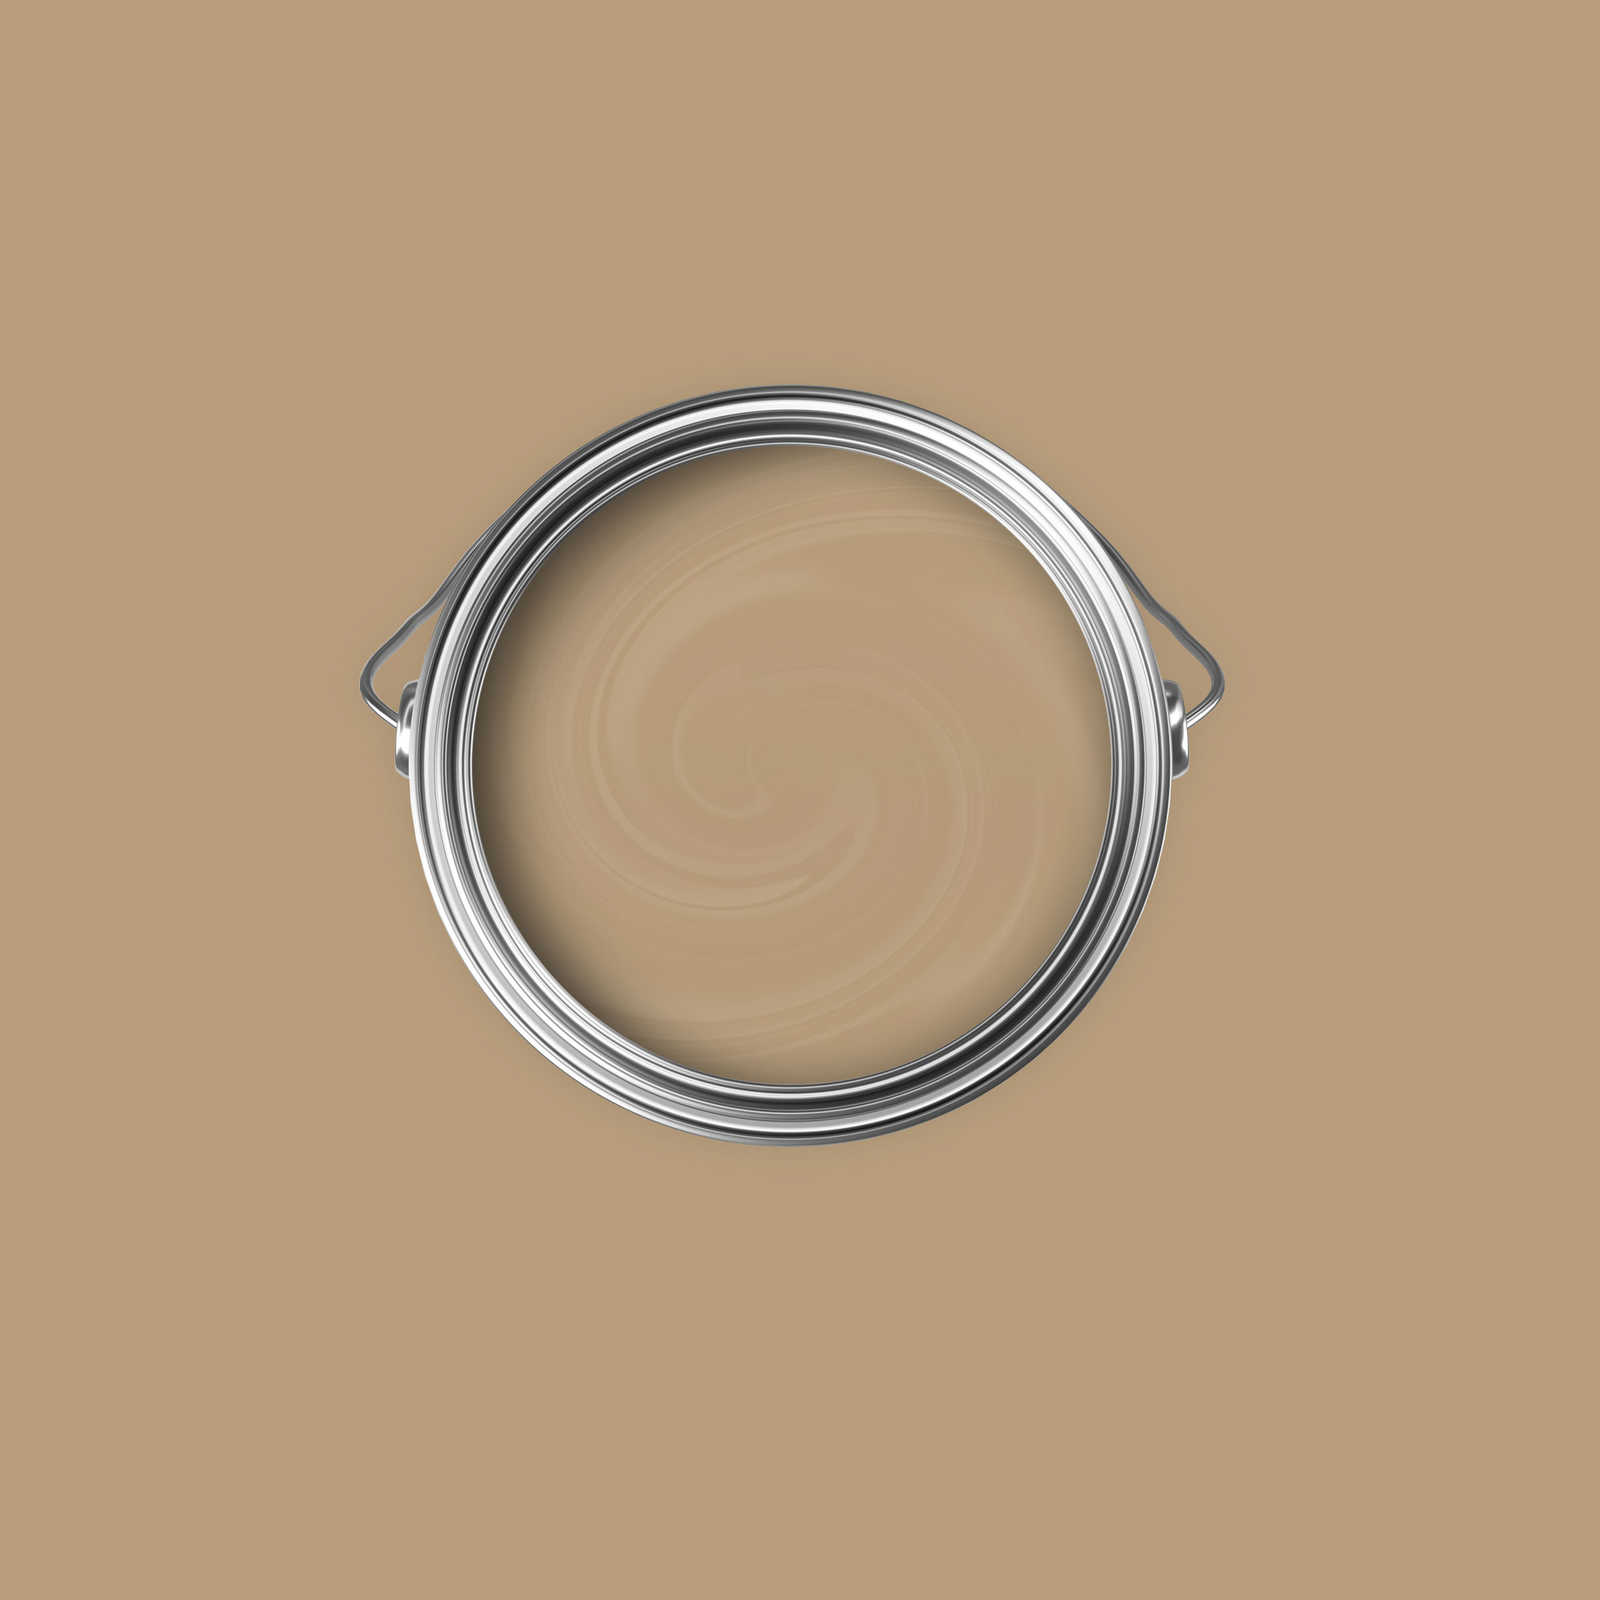             Premium Wandfarbe natürliches Cappuccino »Essential Earth« NW710 – 2,5 Liter
        